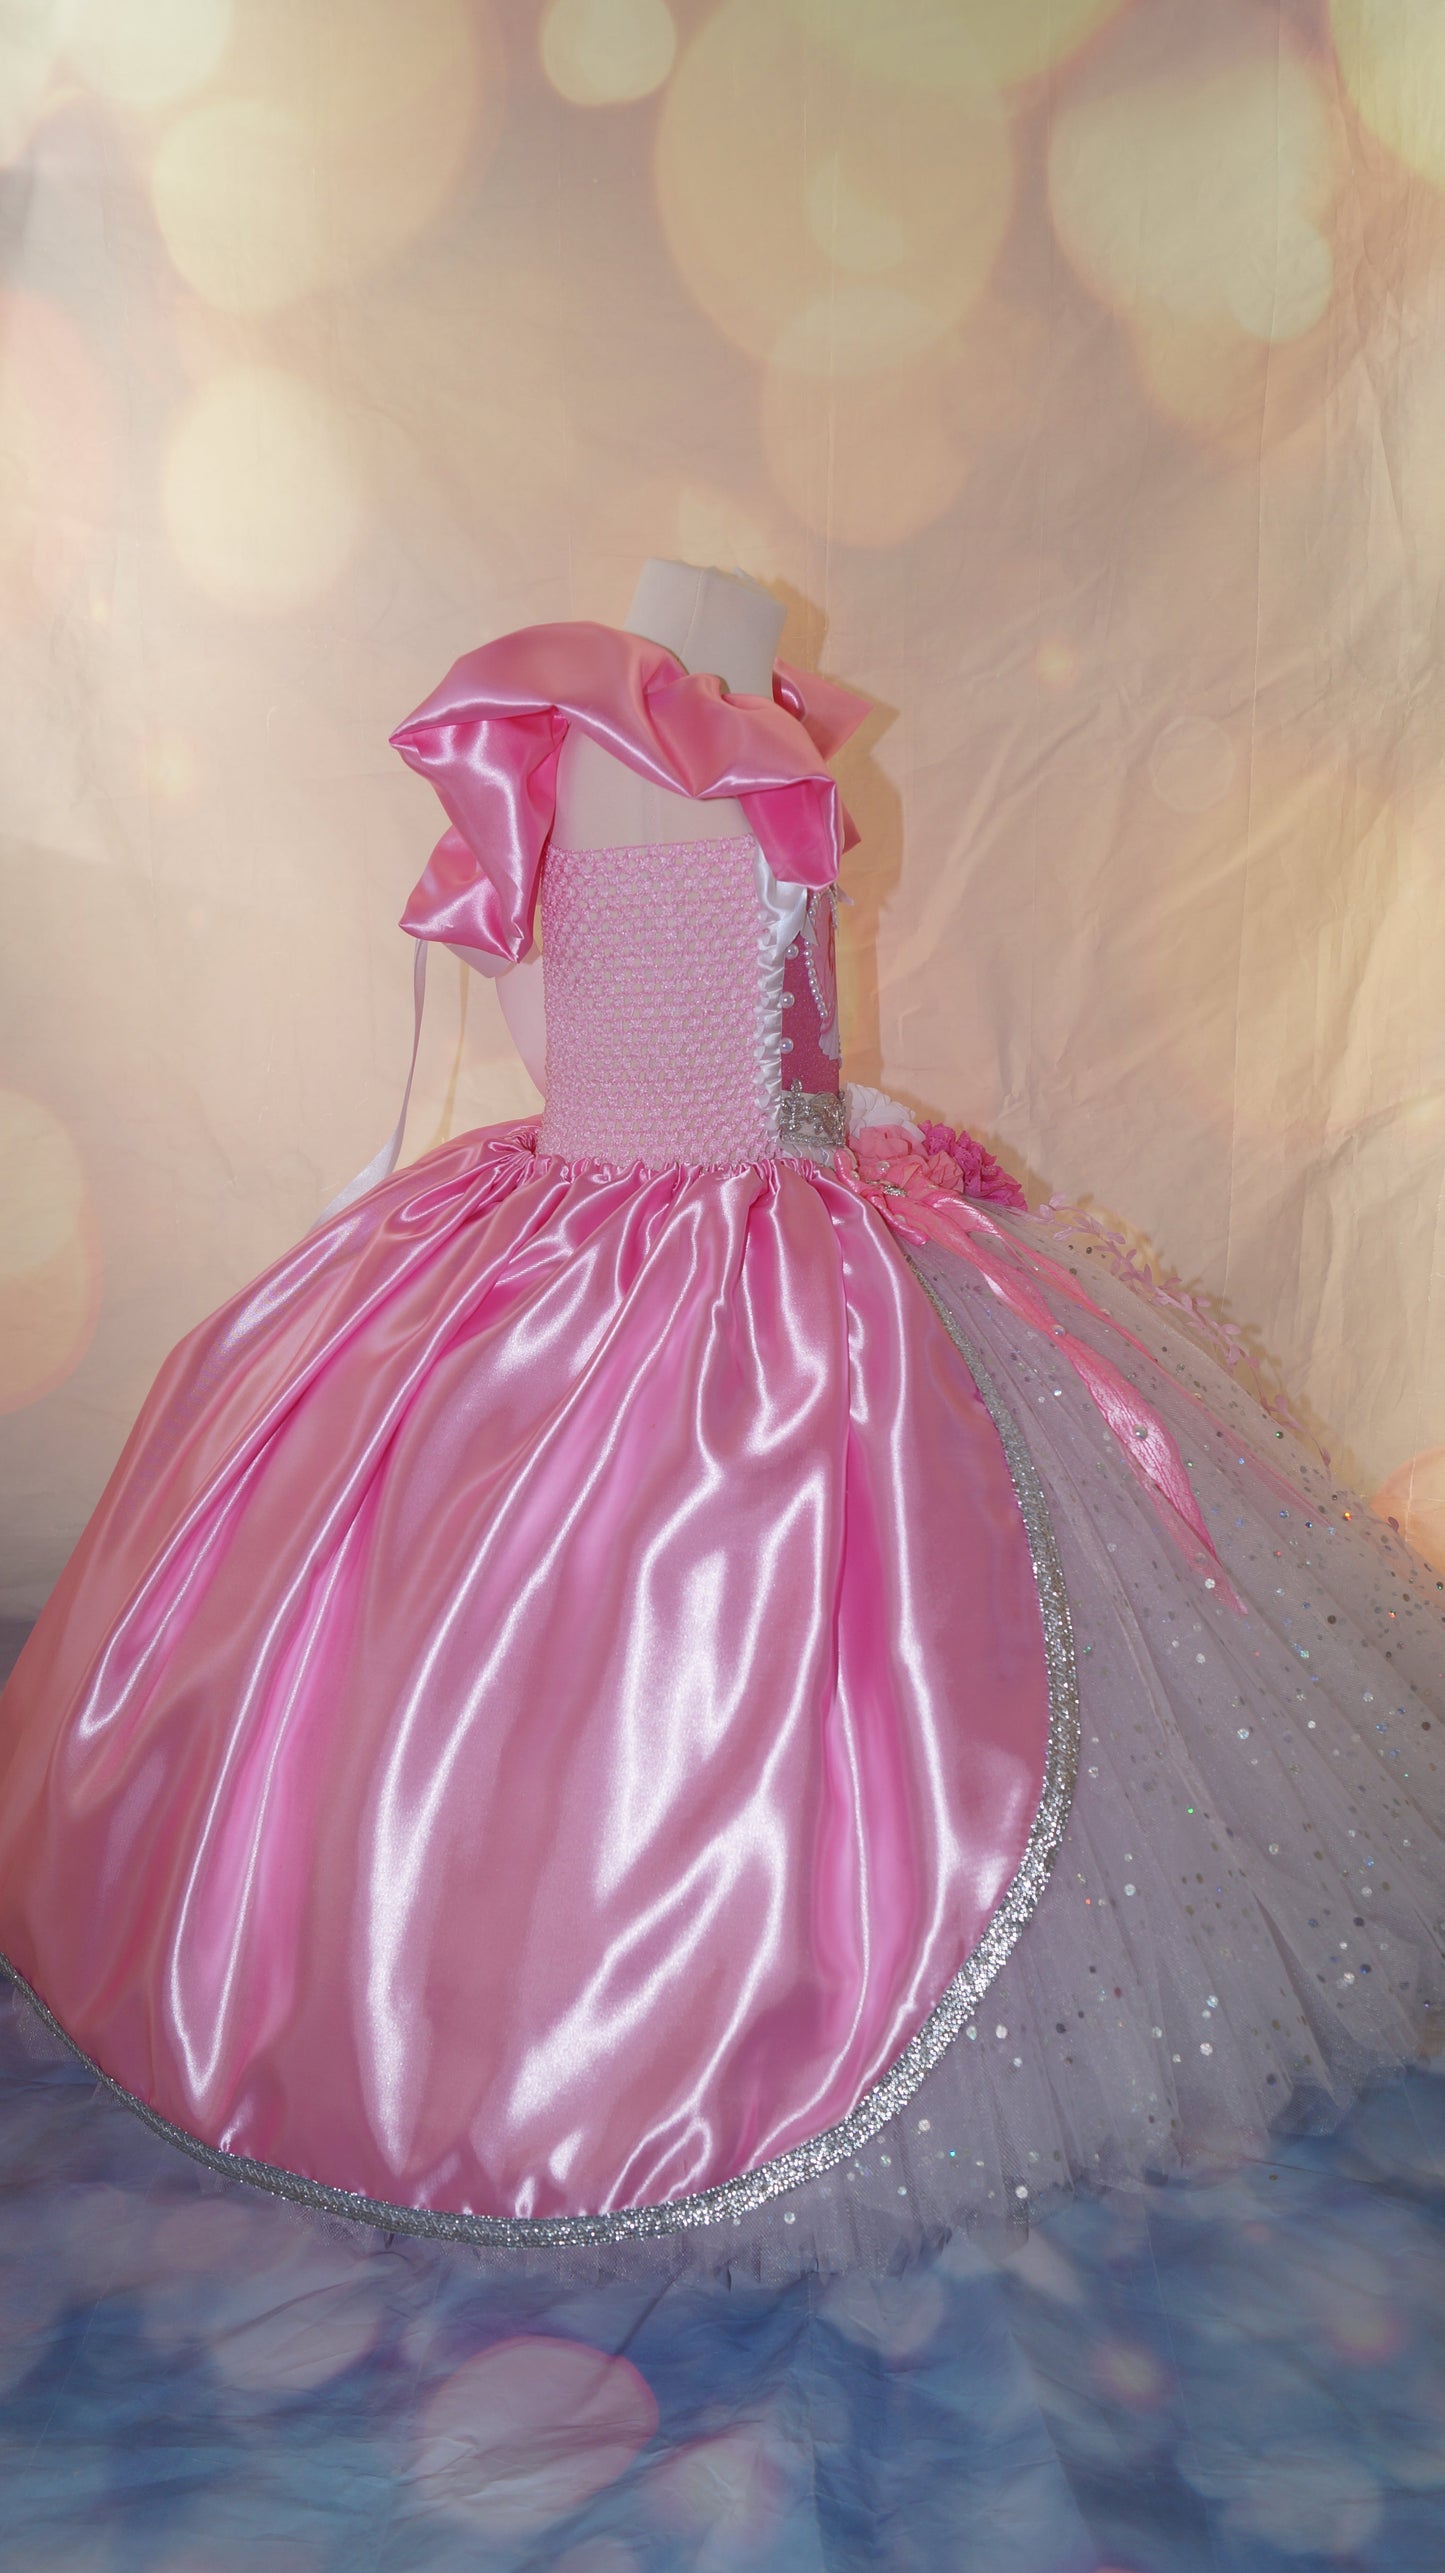 Disney Princess Ariel The Little Mermaid Pink Ballgown Tutu Dress